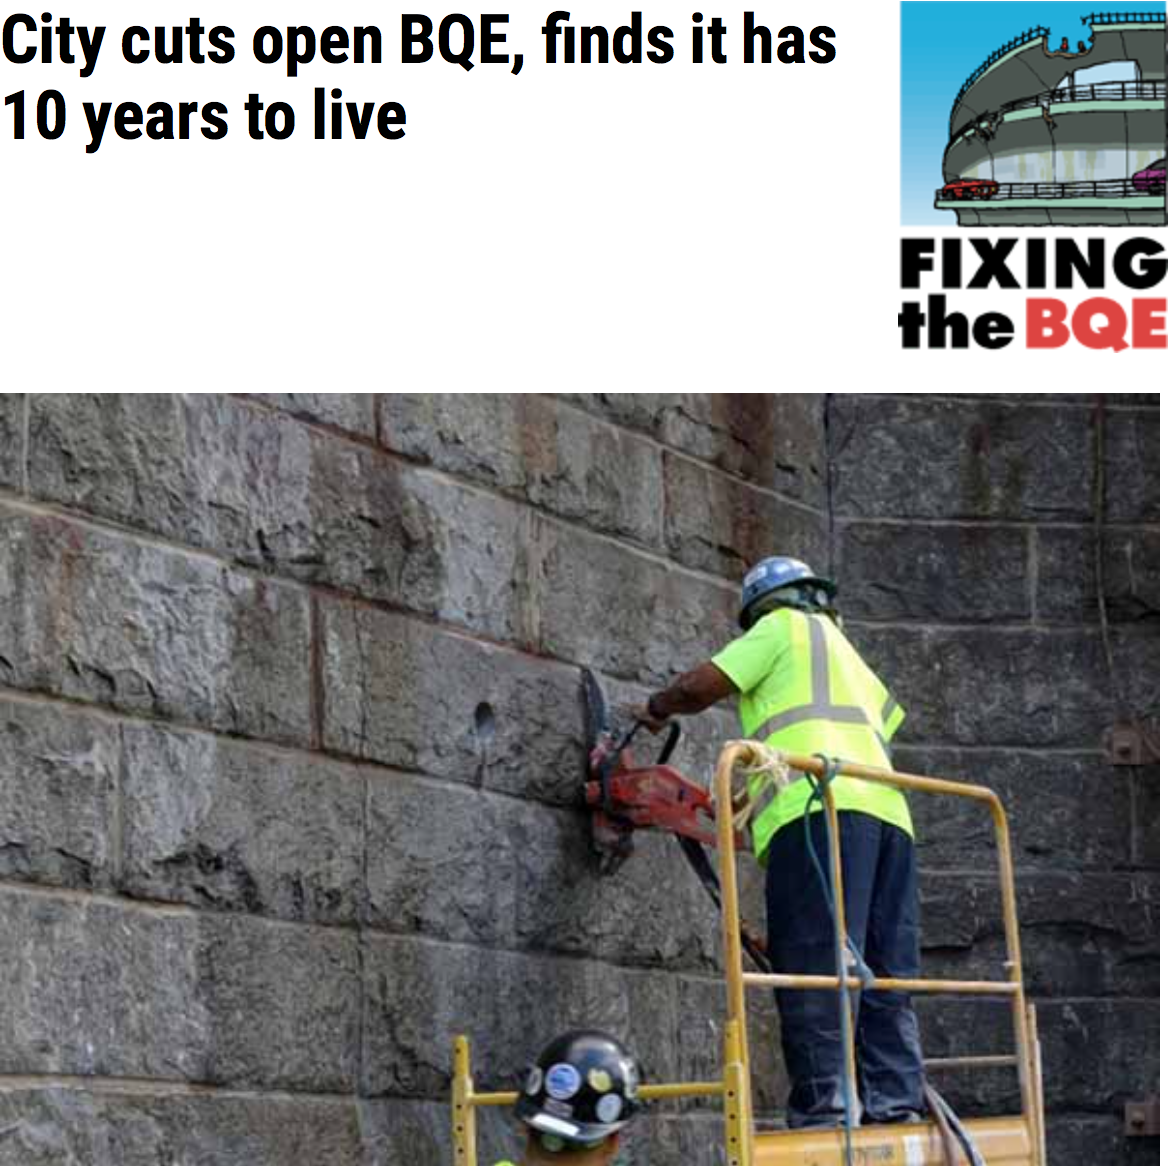 Eastern Cutting Local Press Coverage, Brooklyn Newspaper